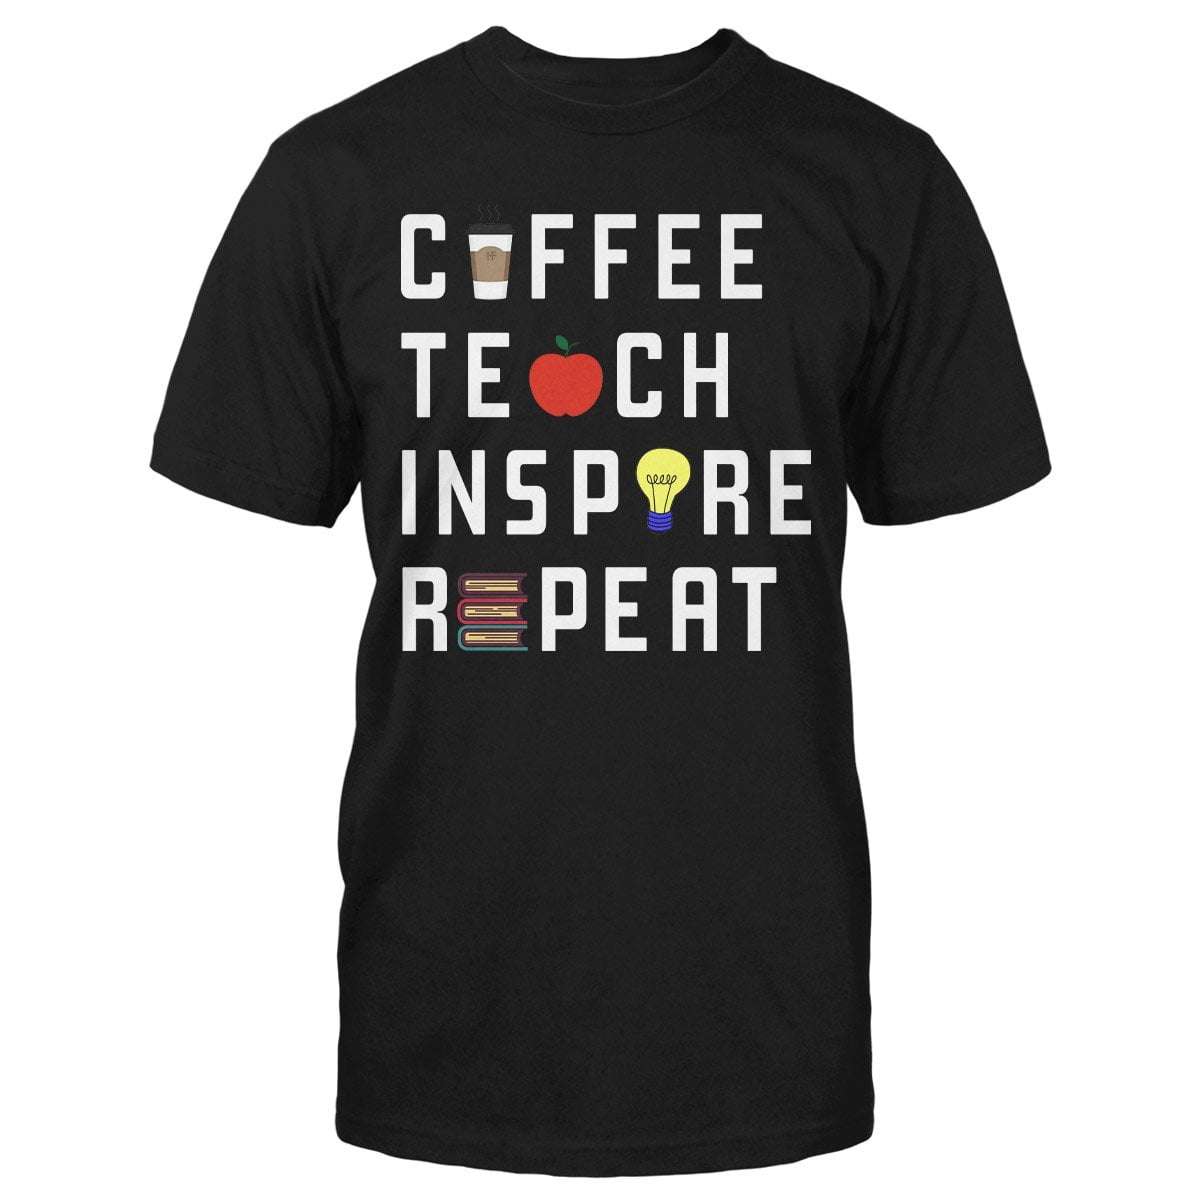 Coffee teach inspire repeat - Teacher educational job, teacher loves coffee